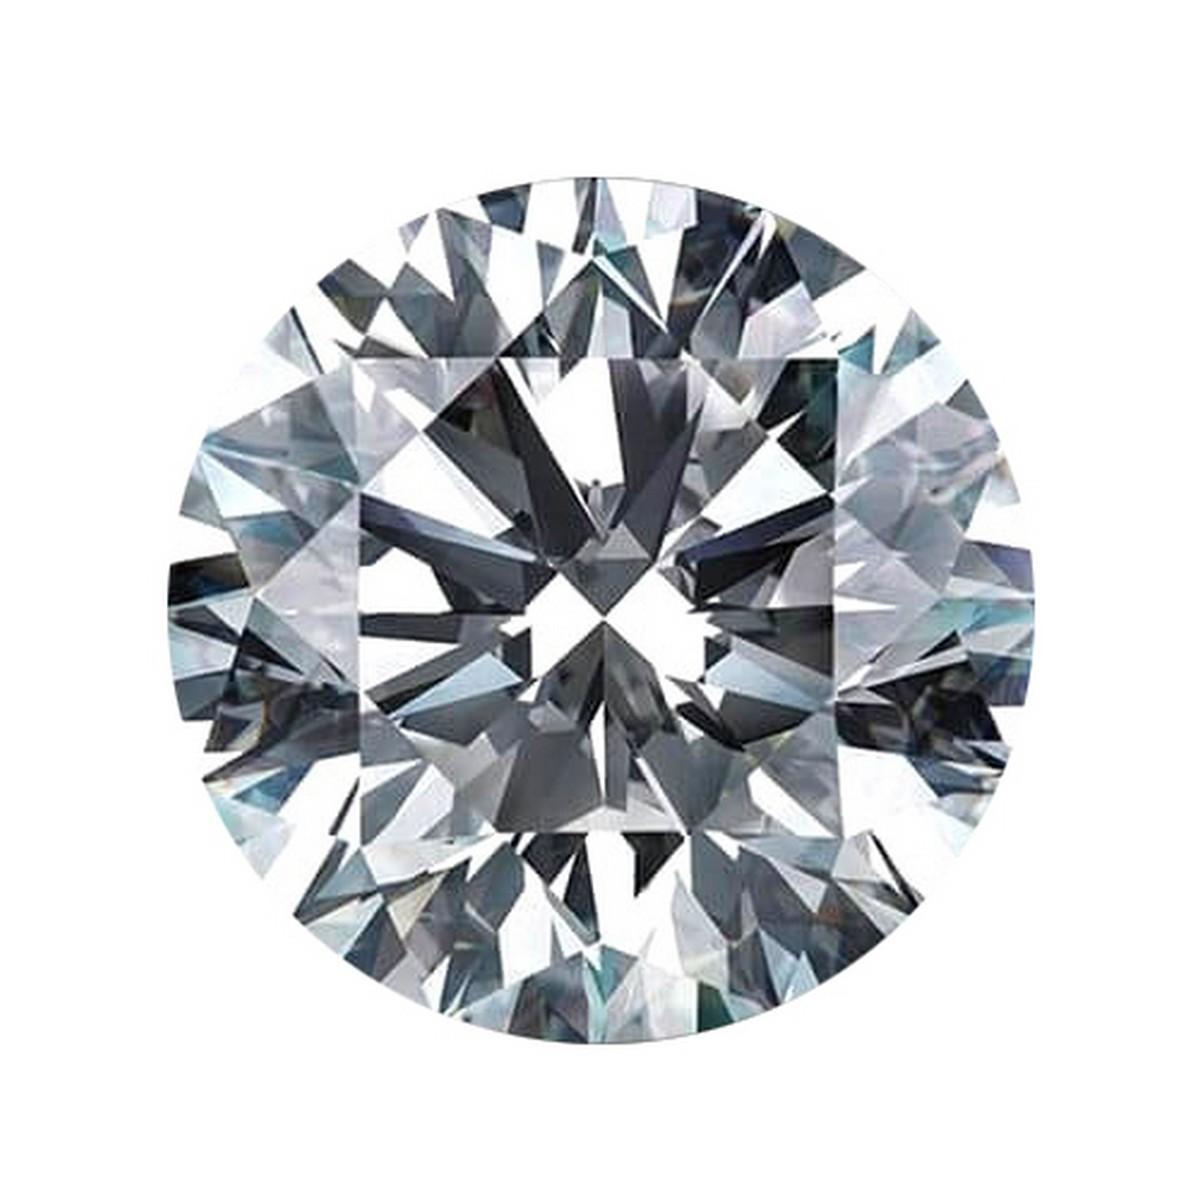 3.08 ctw. VVS2 IGI Certified Round Cut Loose Diamond (LAB GROWN)